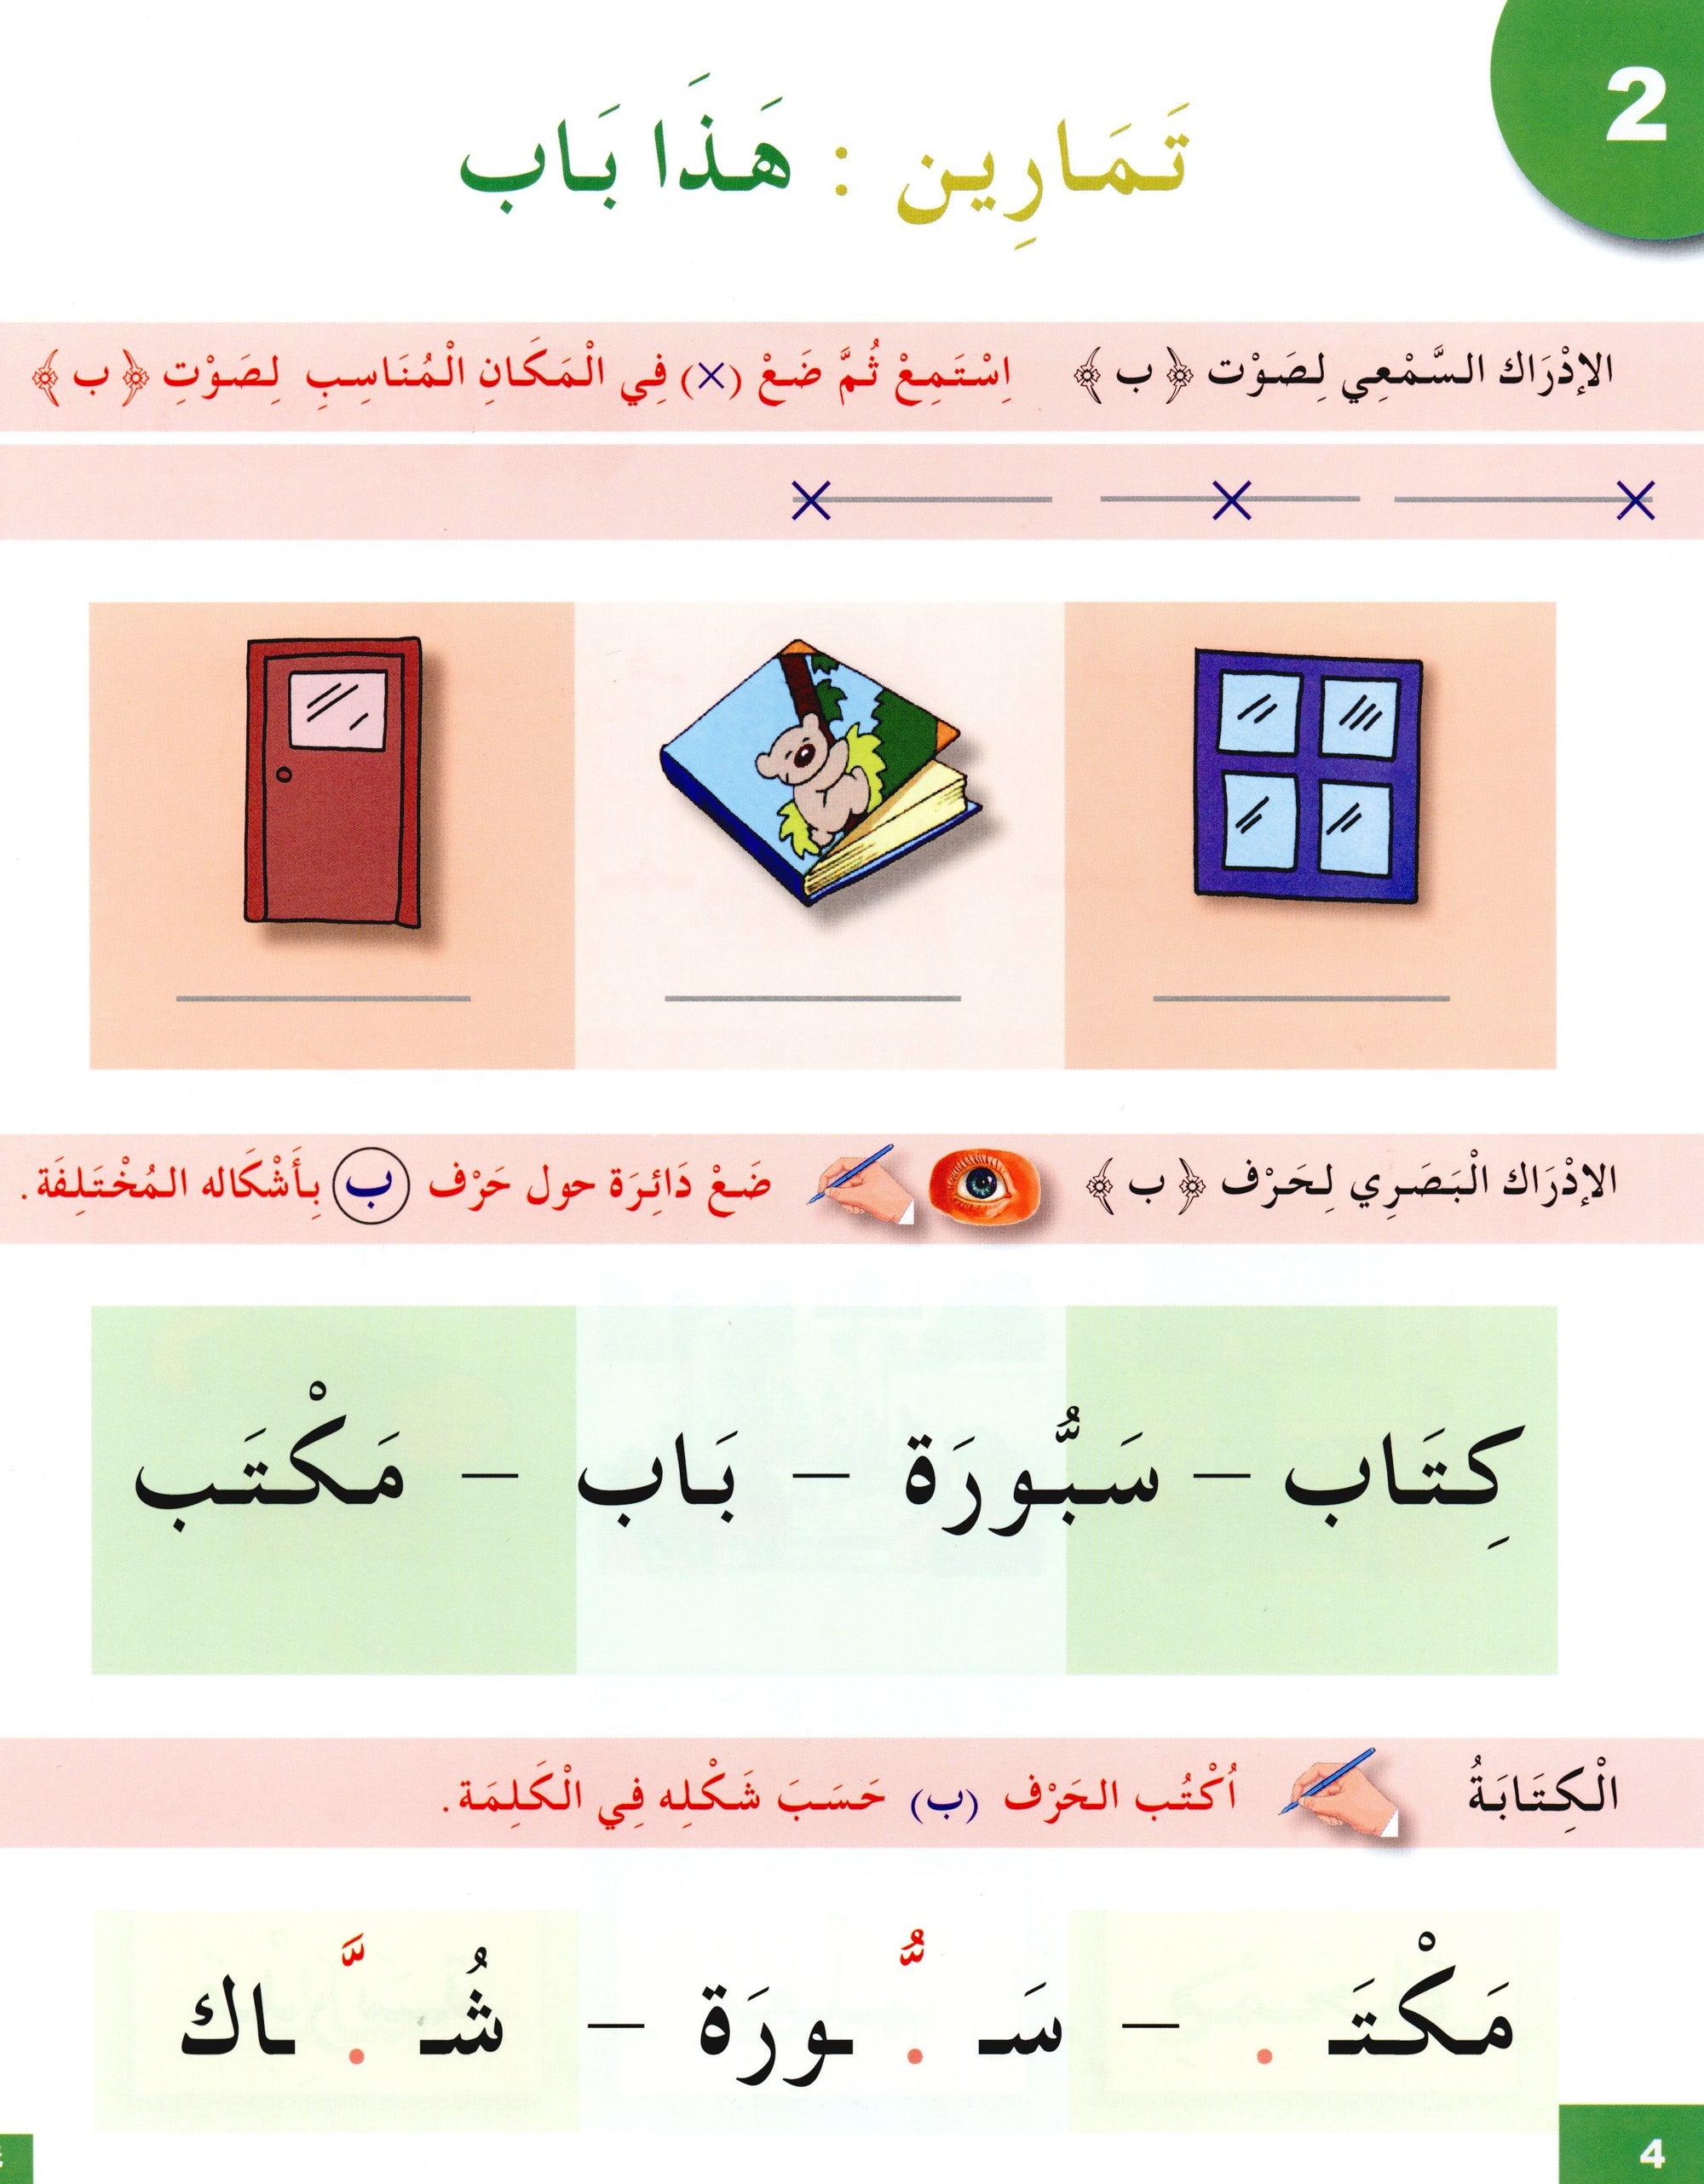 I Learn Arabic Simplified Curriculum Workbook Level 1 أتعلم العربية المنهج الميسر كتاب التمارين